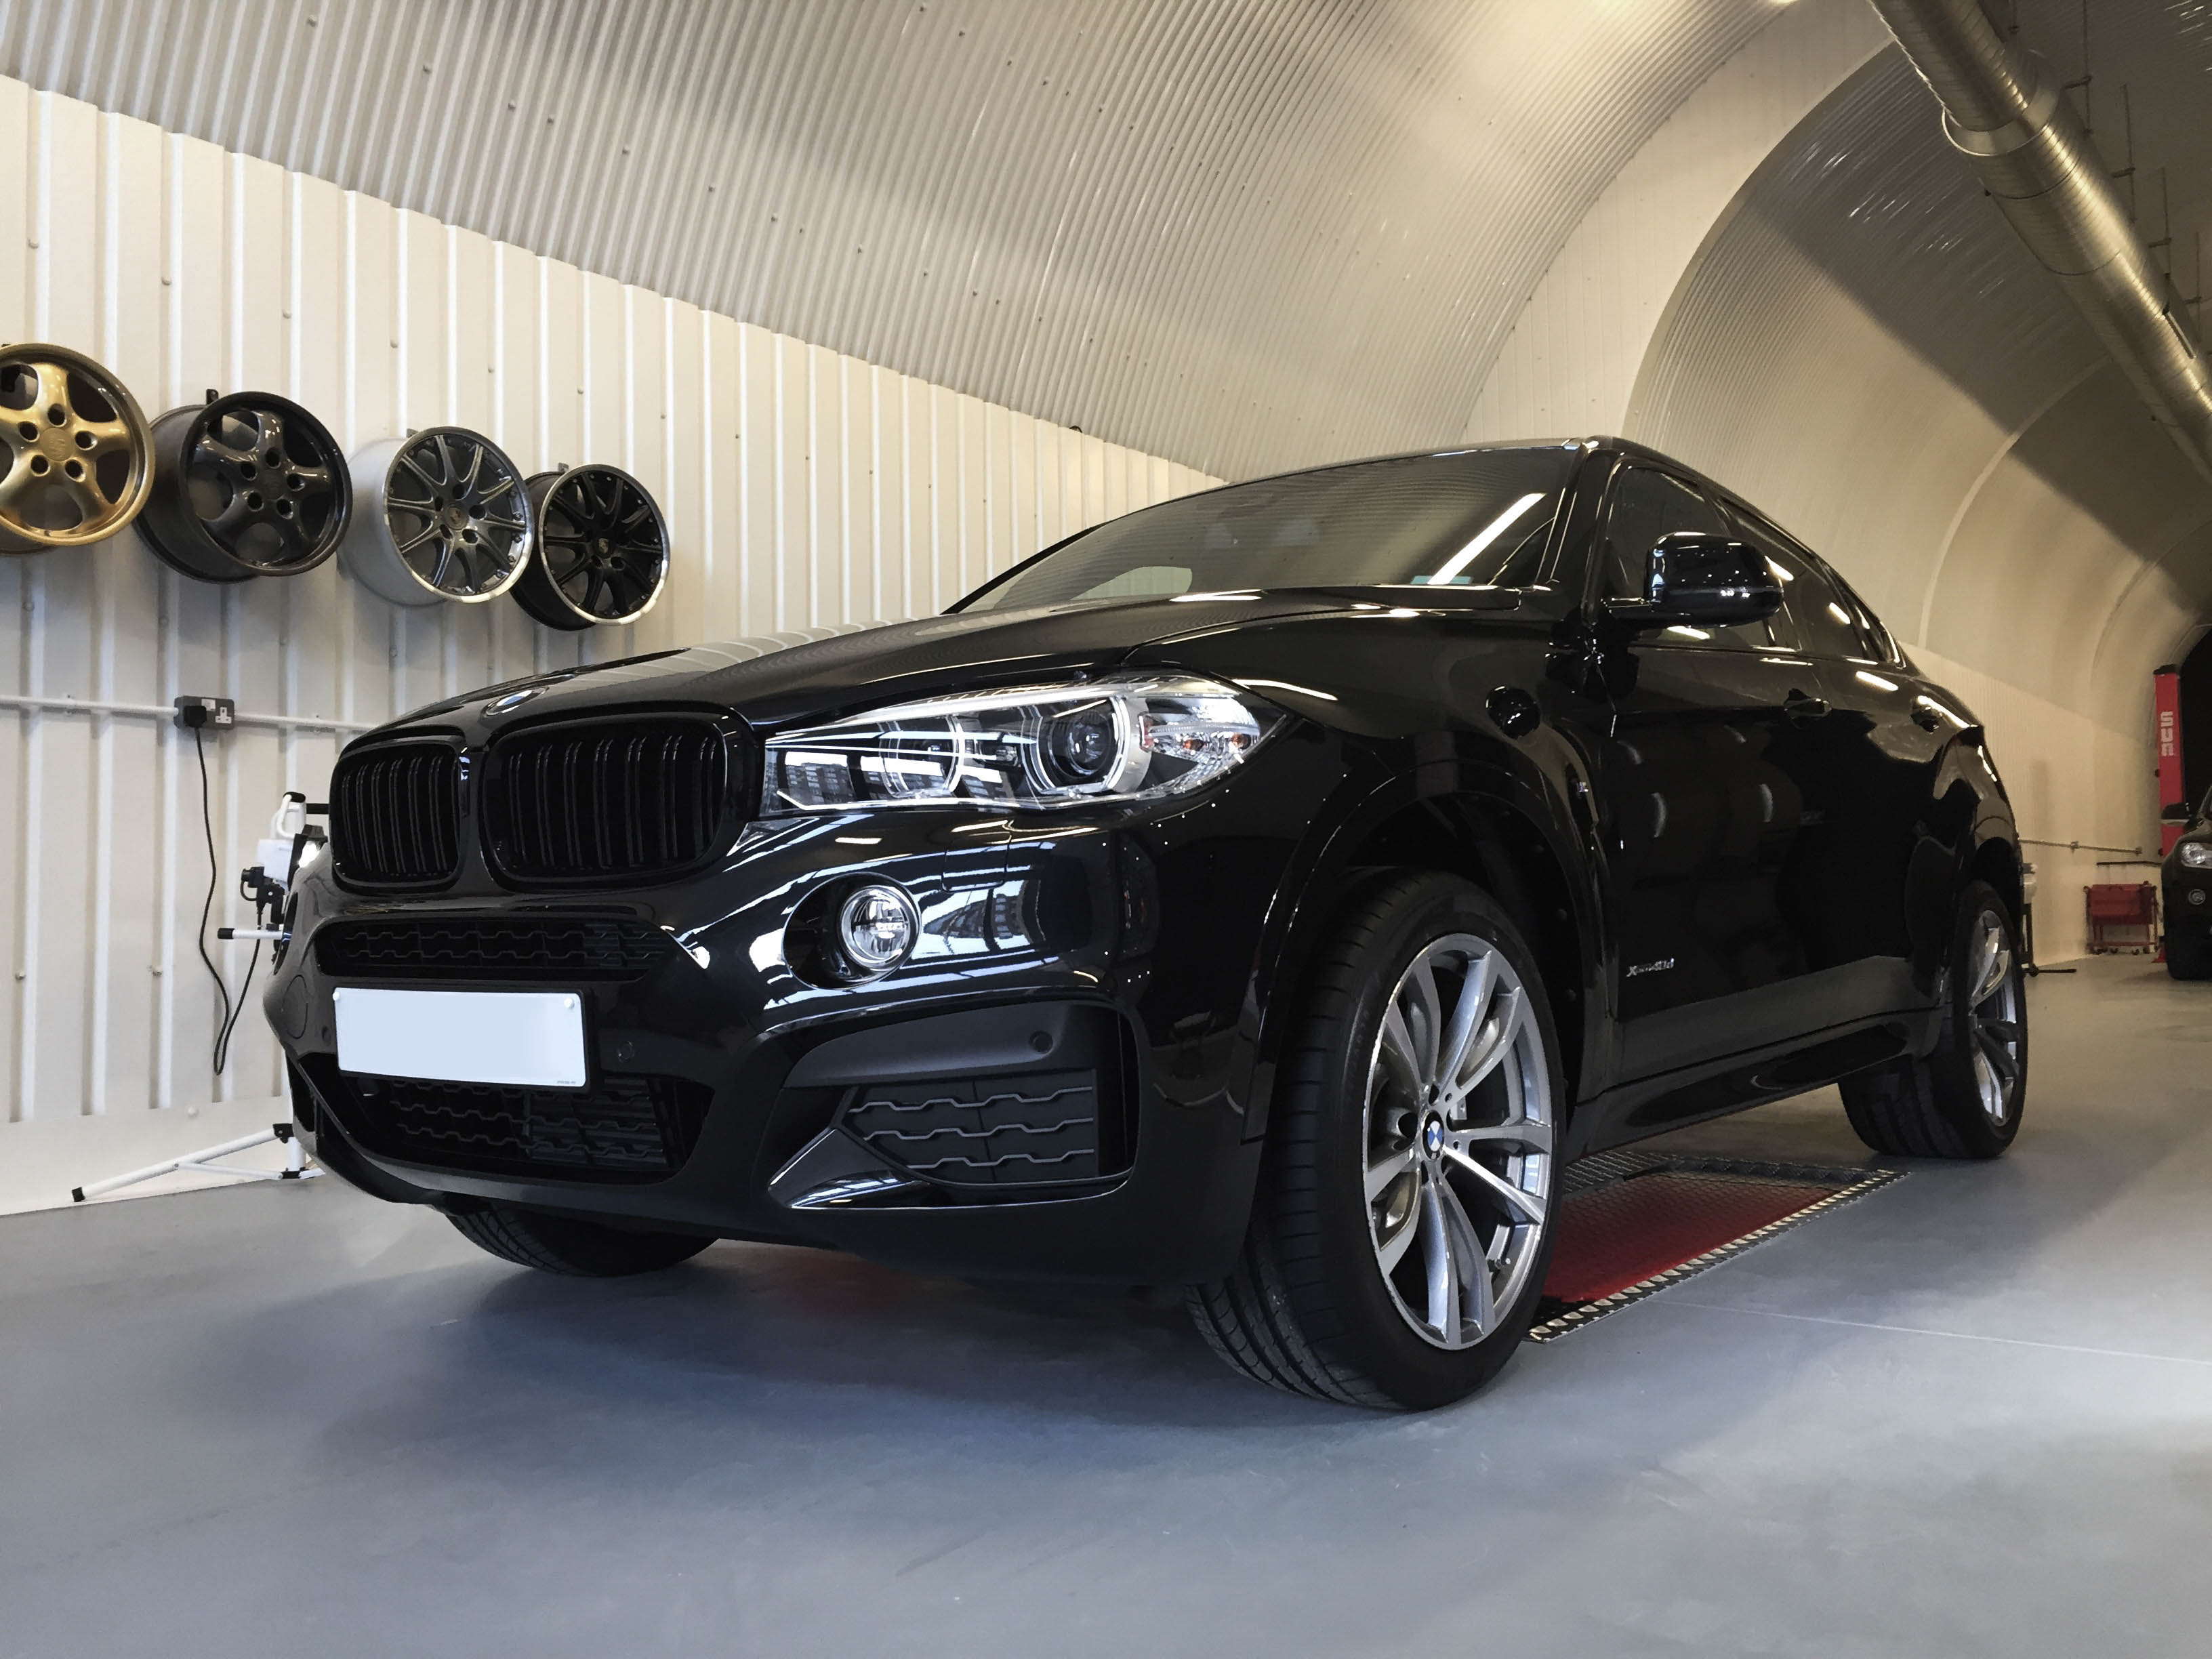 BMW X6 – Front passenger side